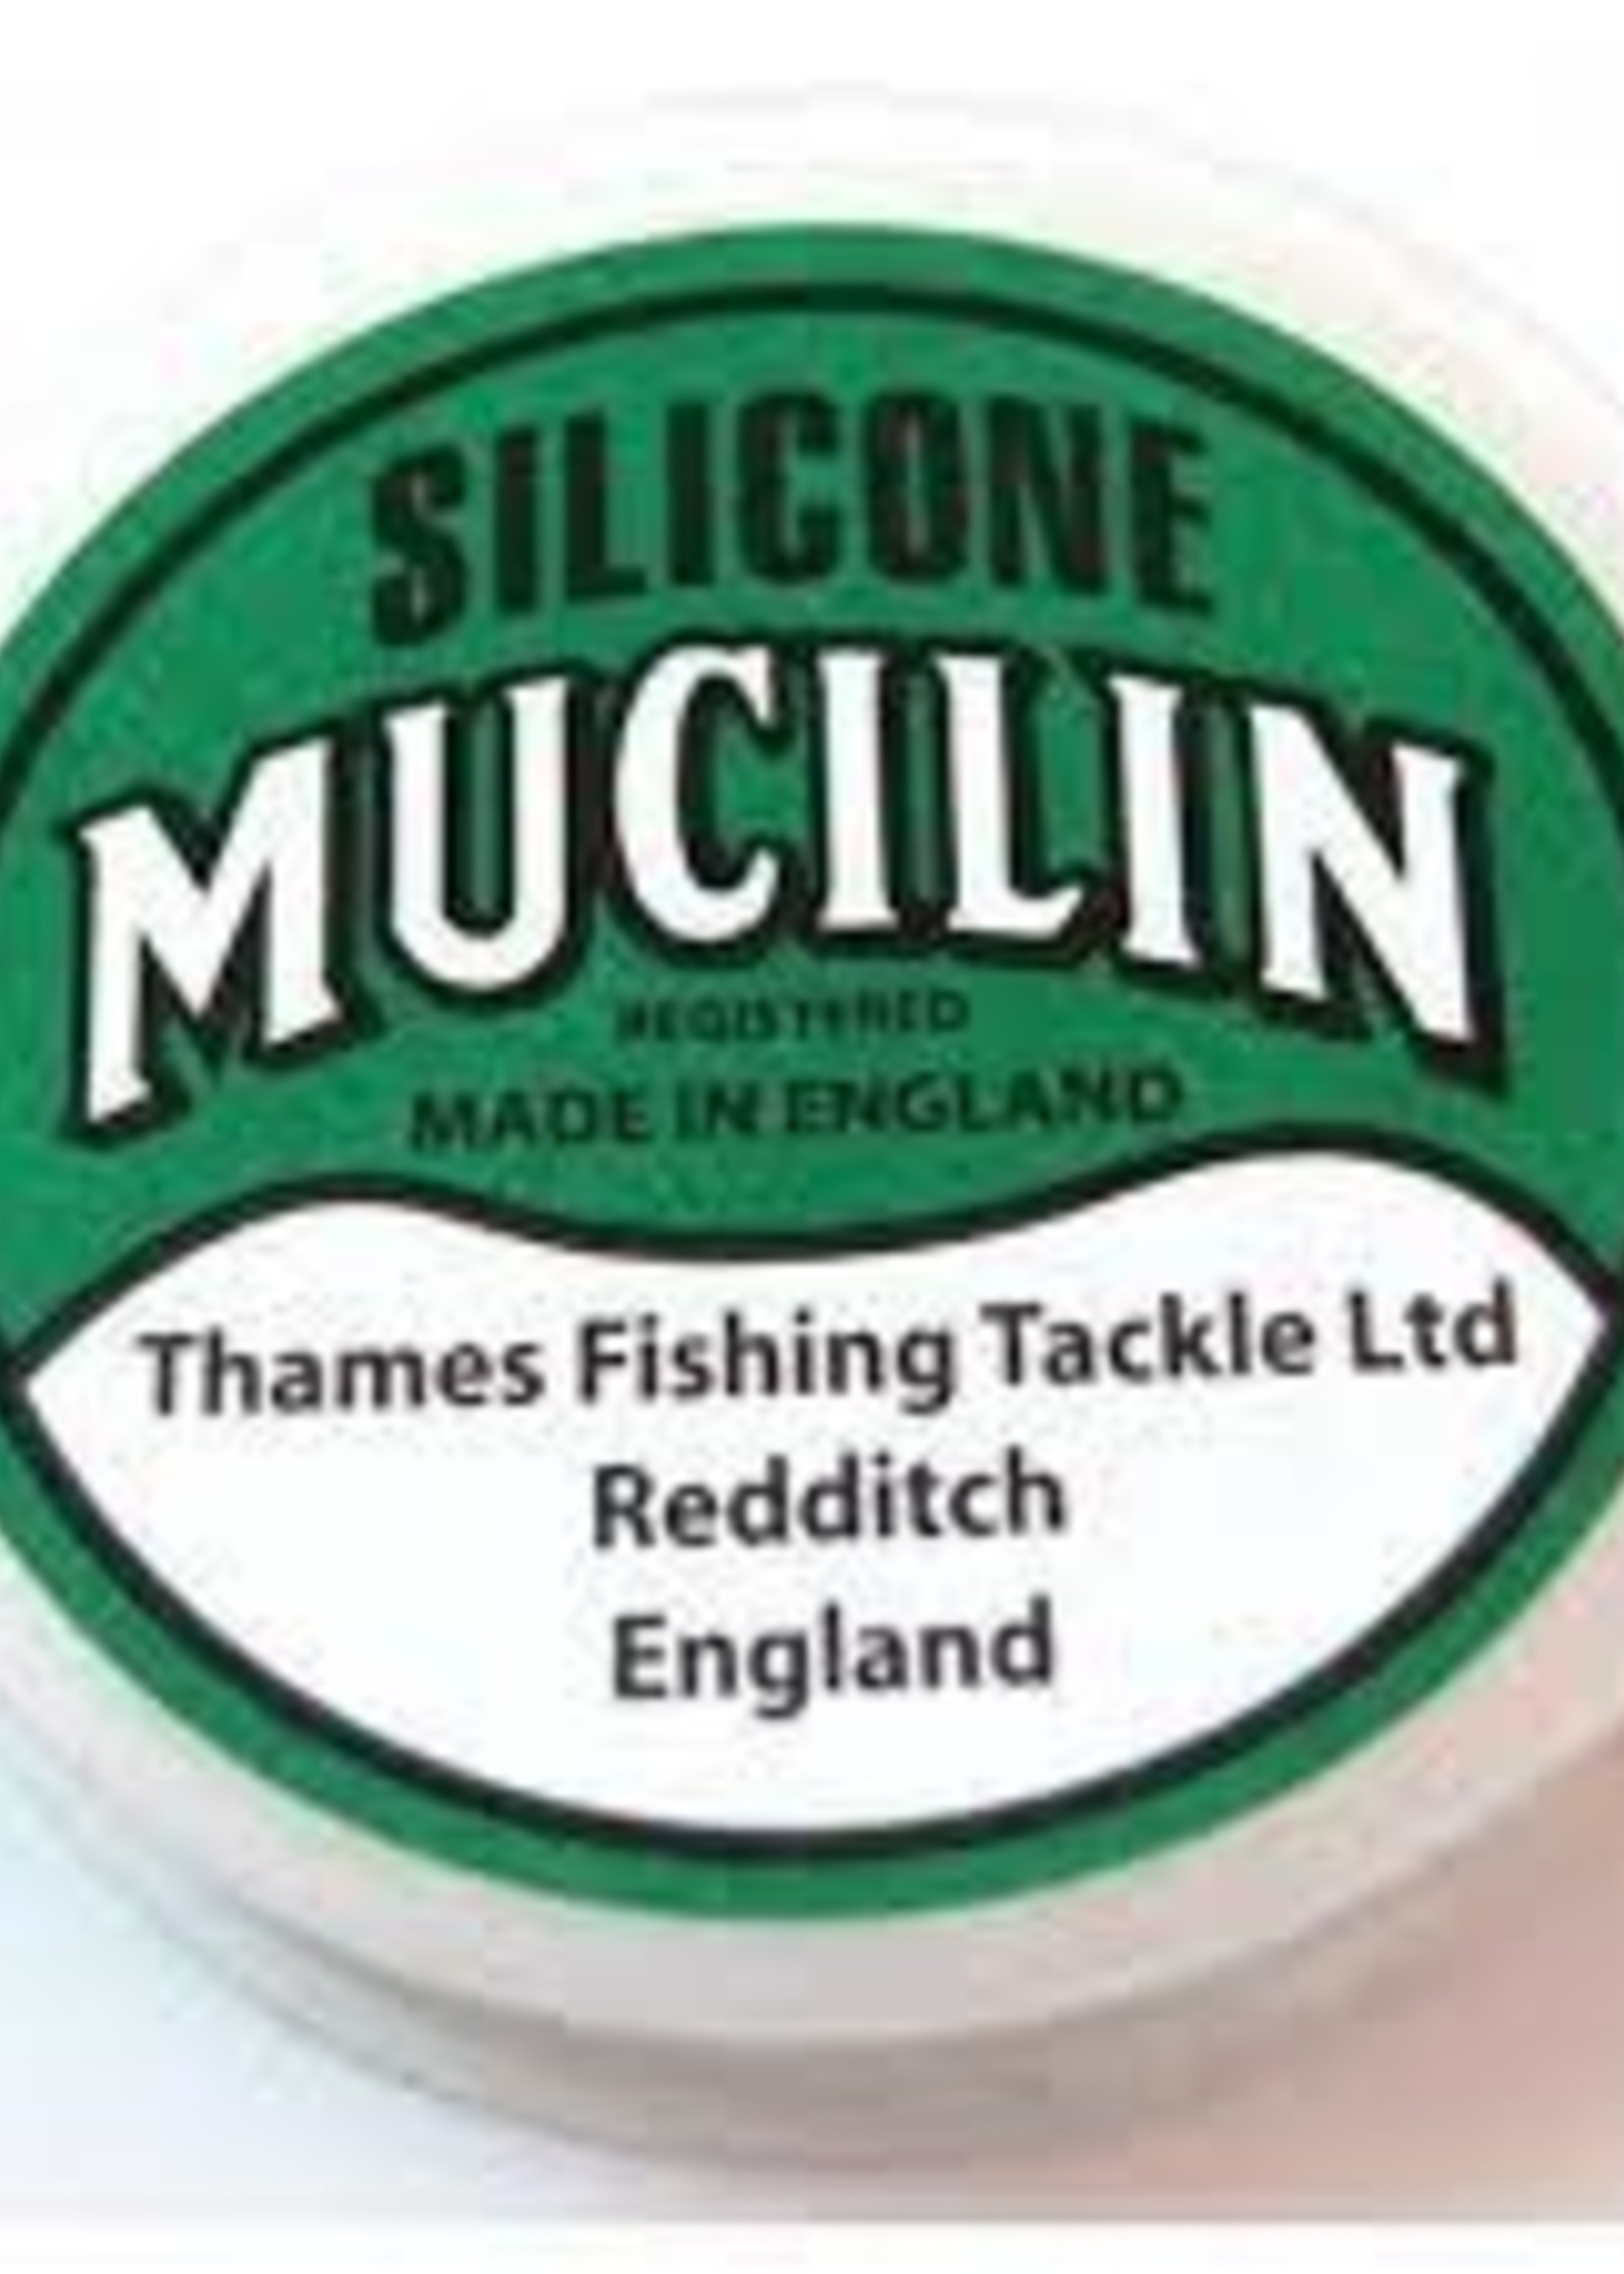 Thames Fishing Tackle Ltd. Mucilin Green